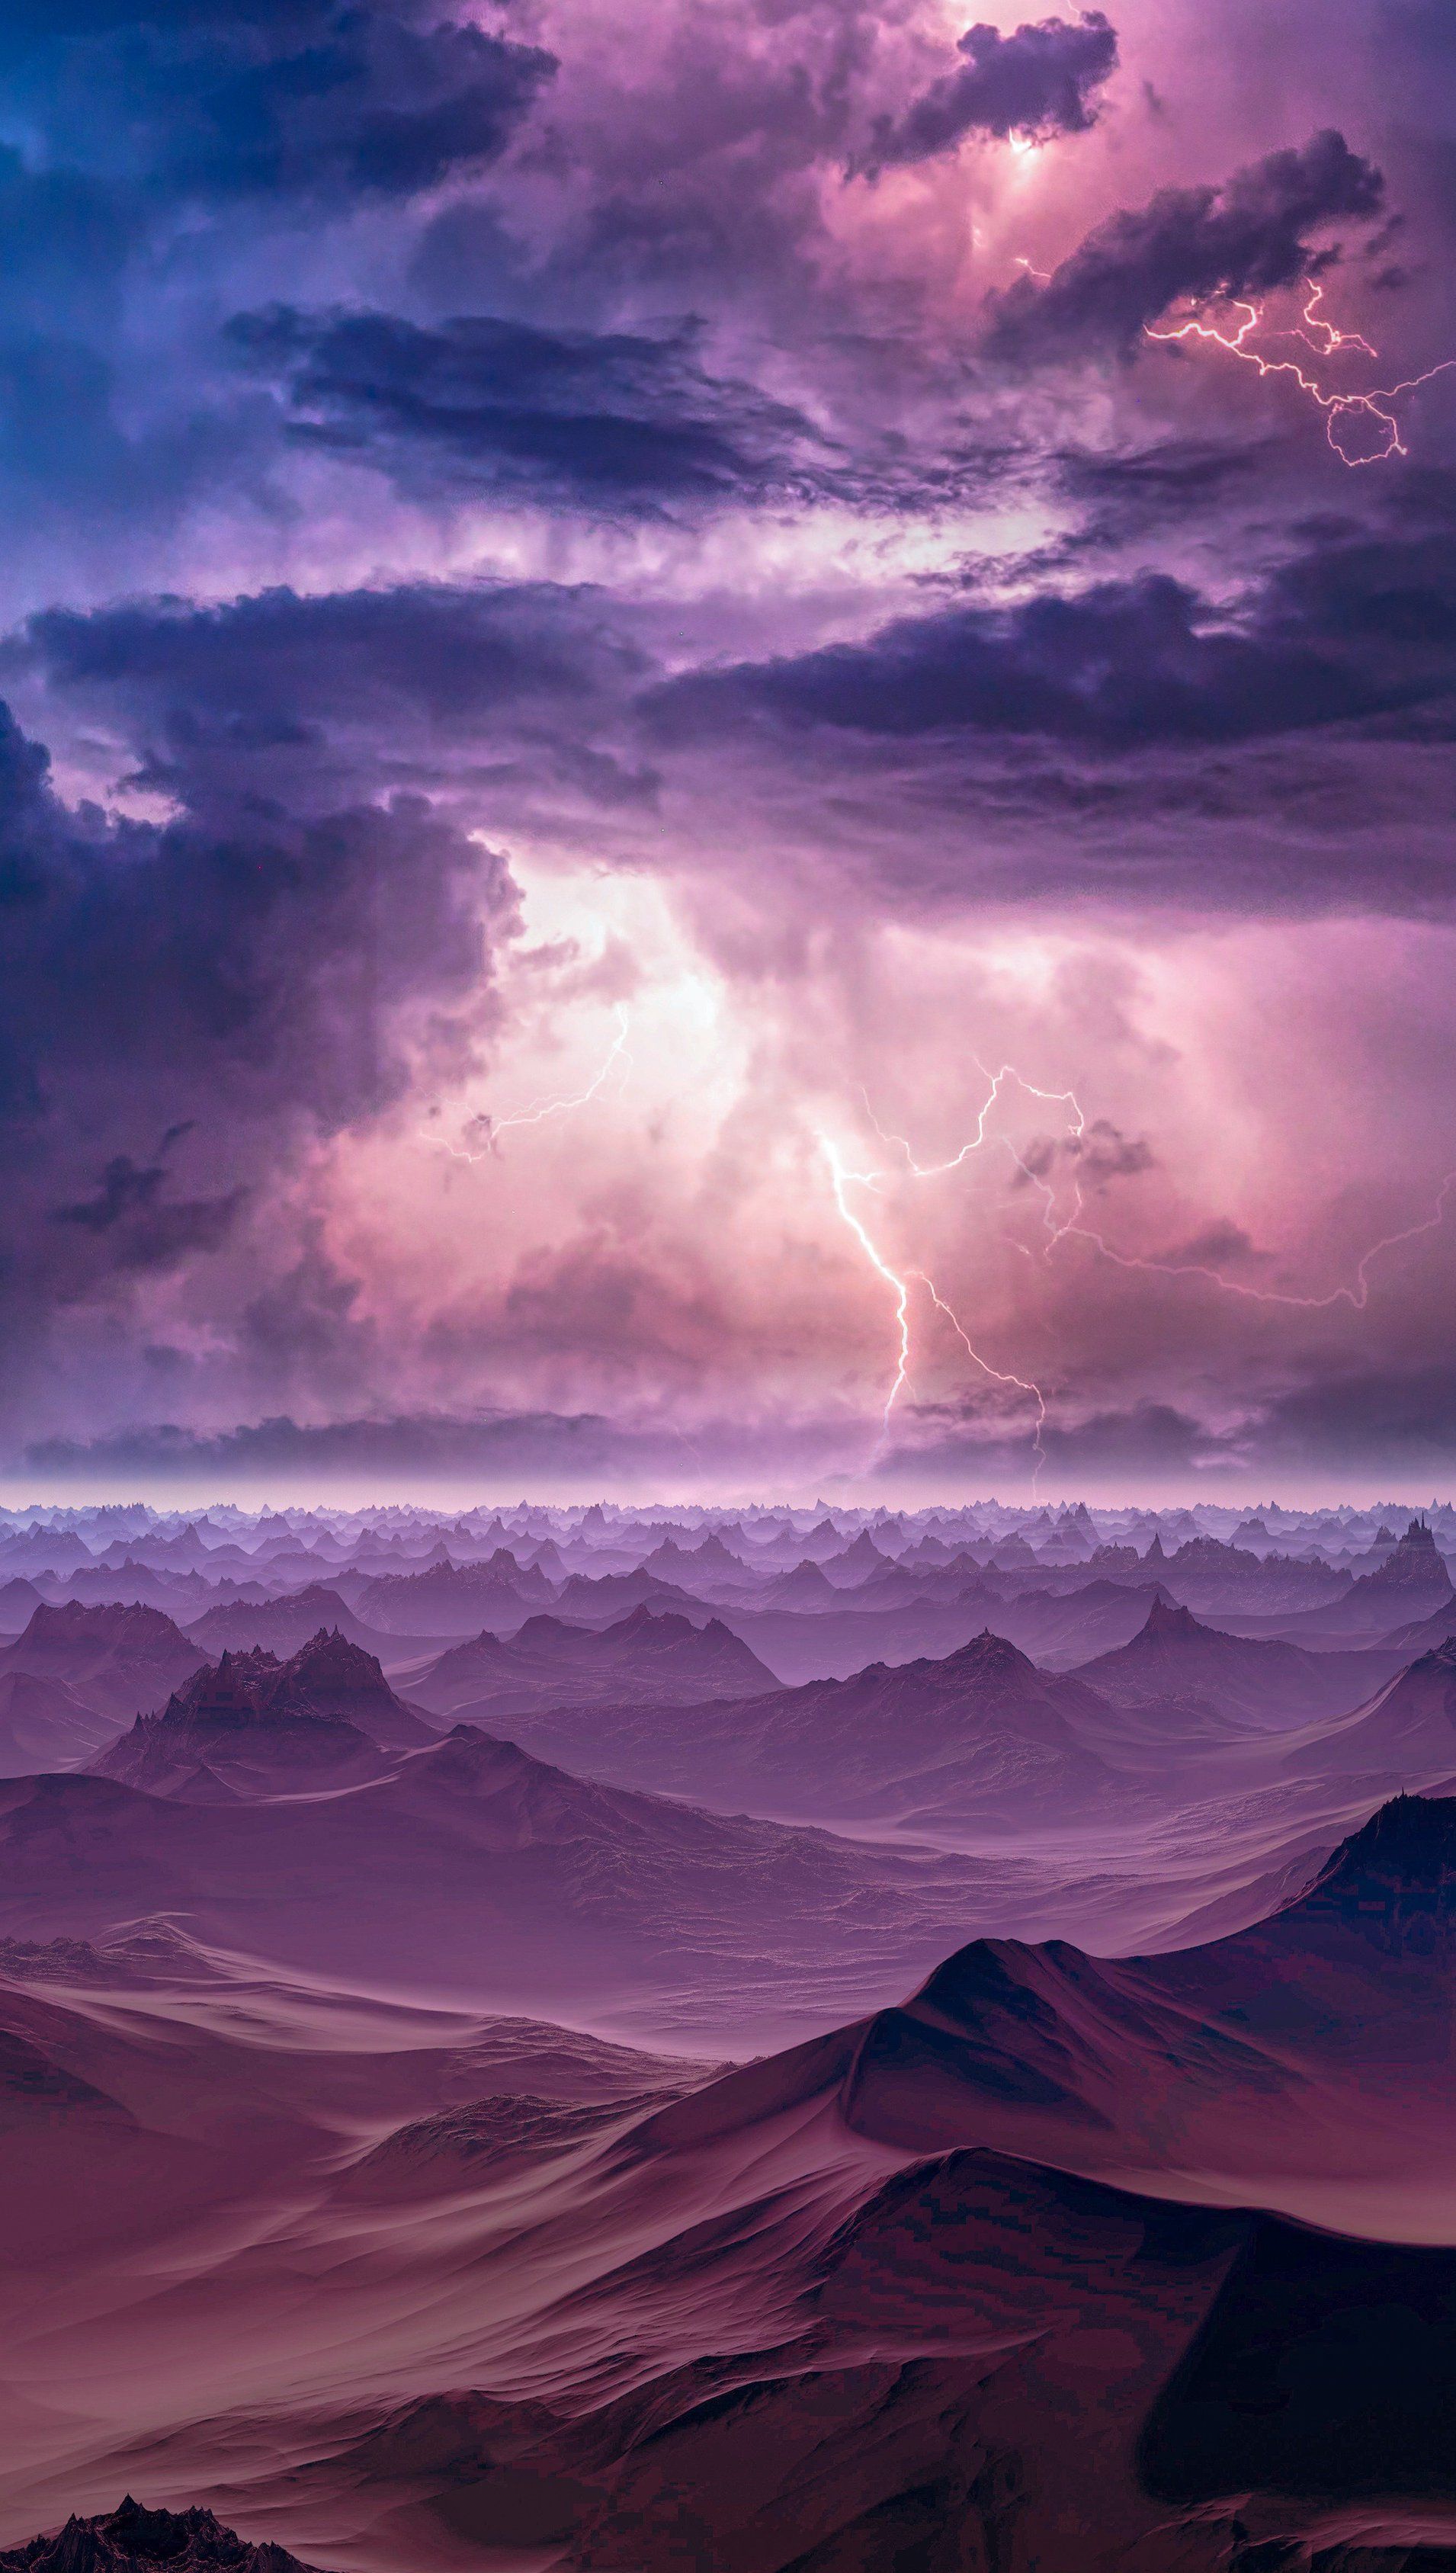 A lightning storm over a mountain range - Storm